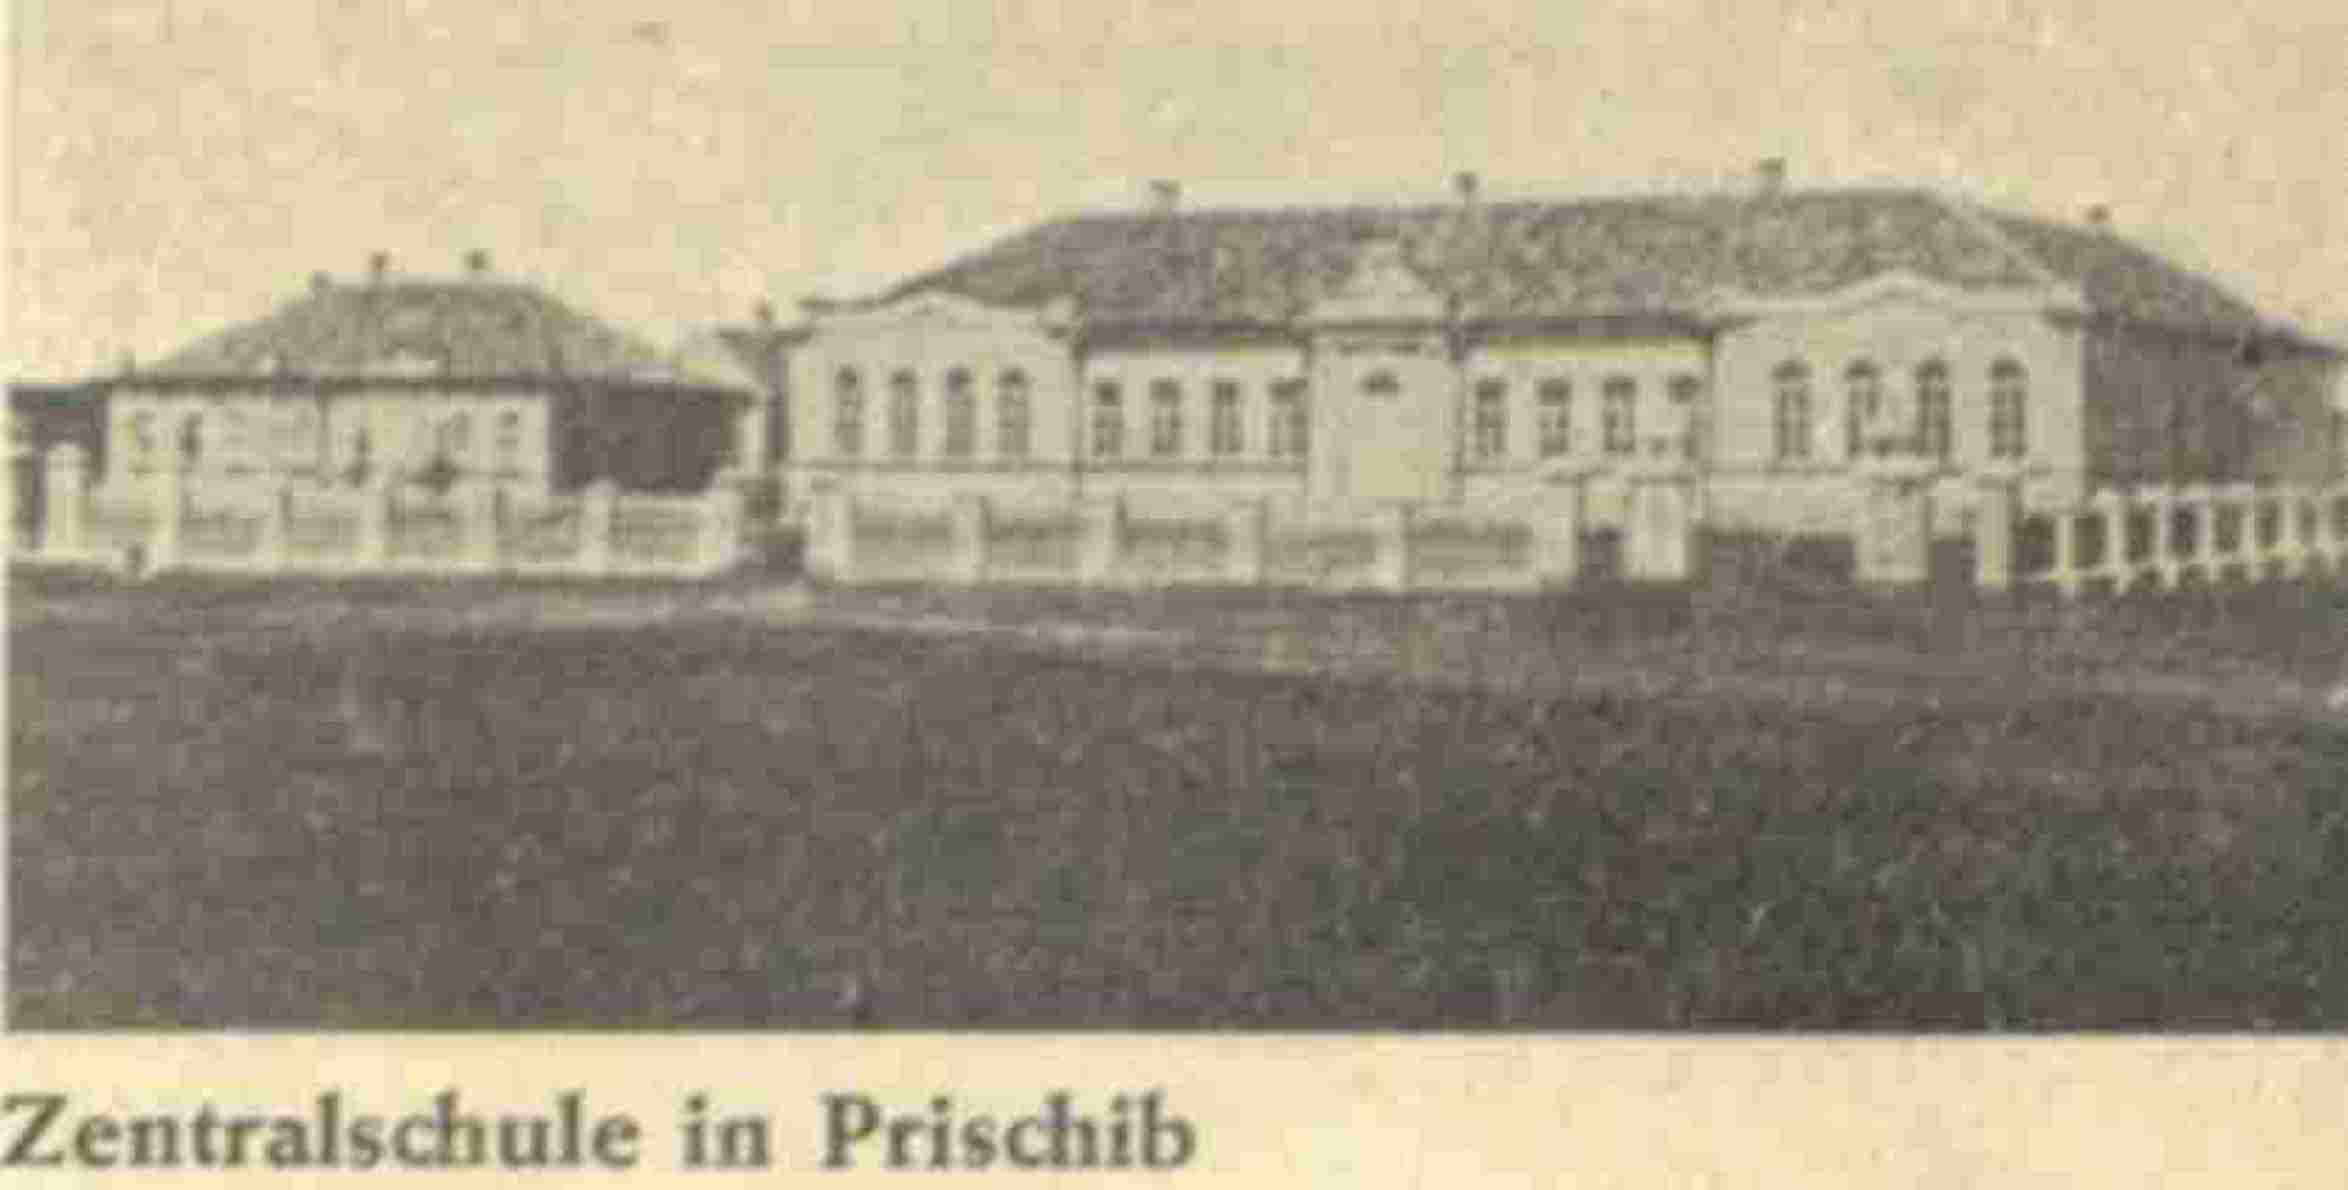 Центральная школа. Пришиб, 1918.